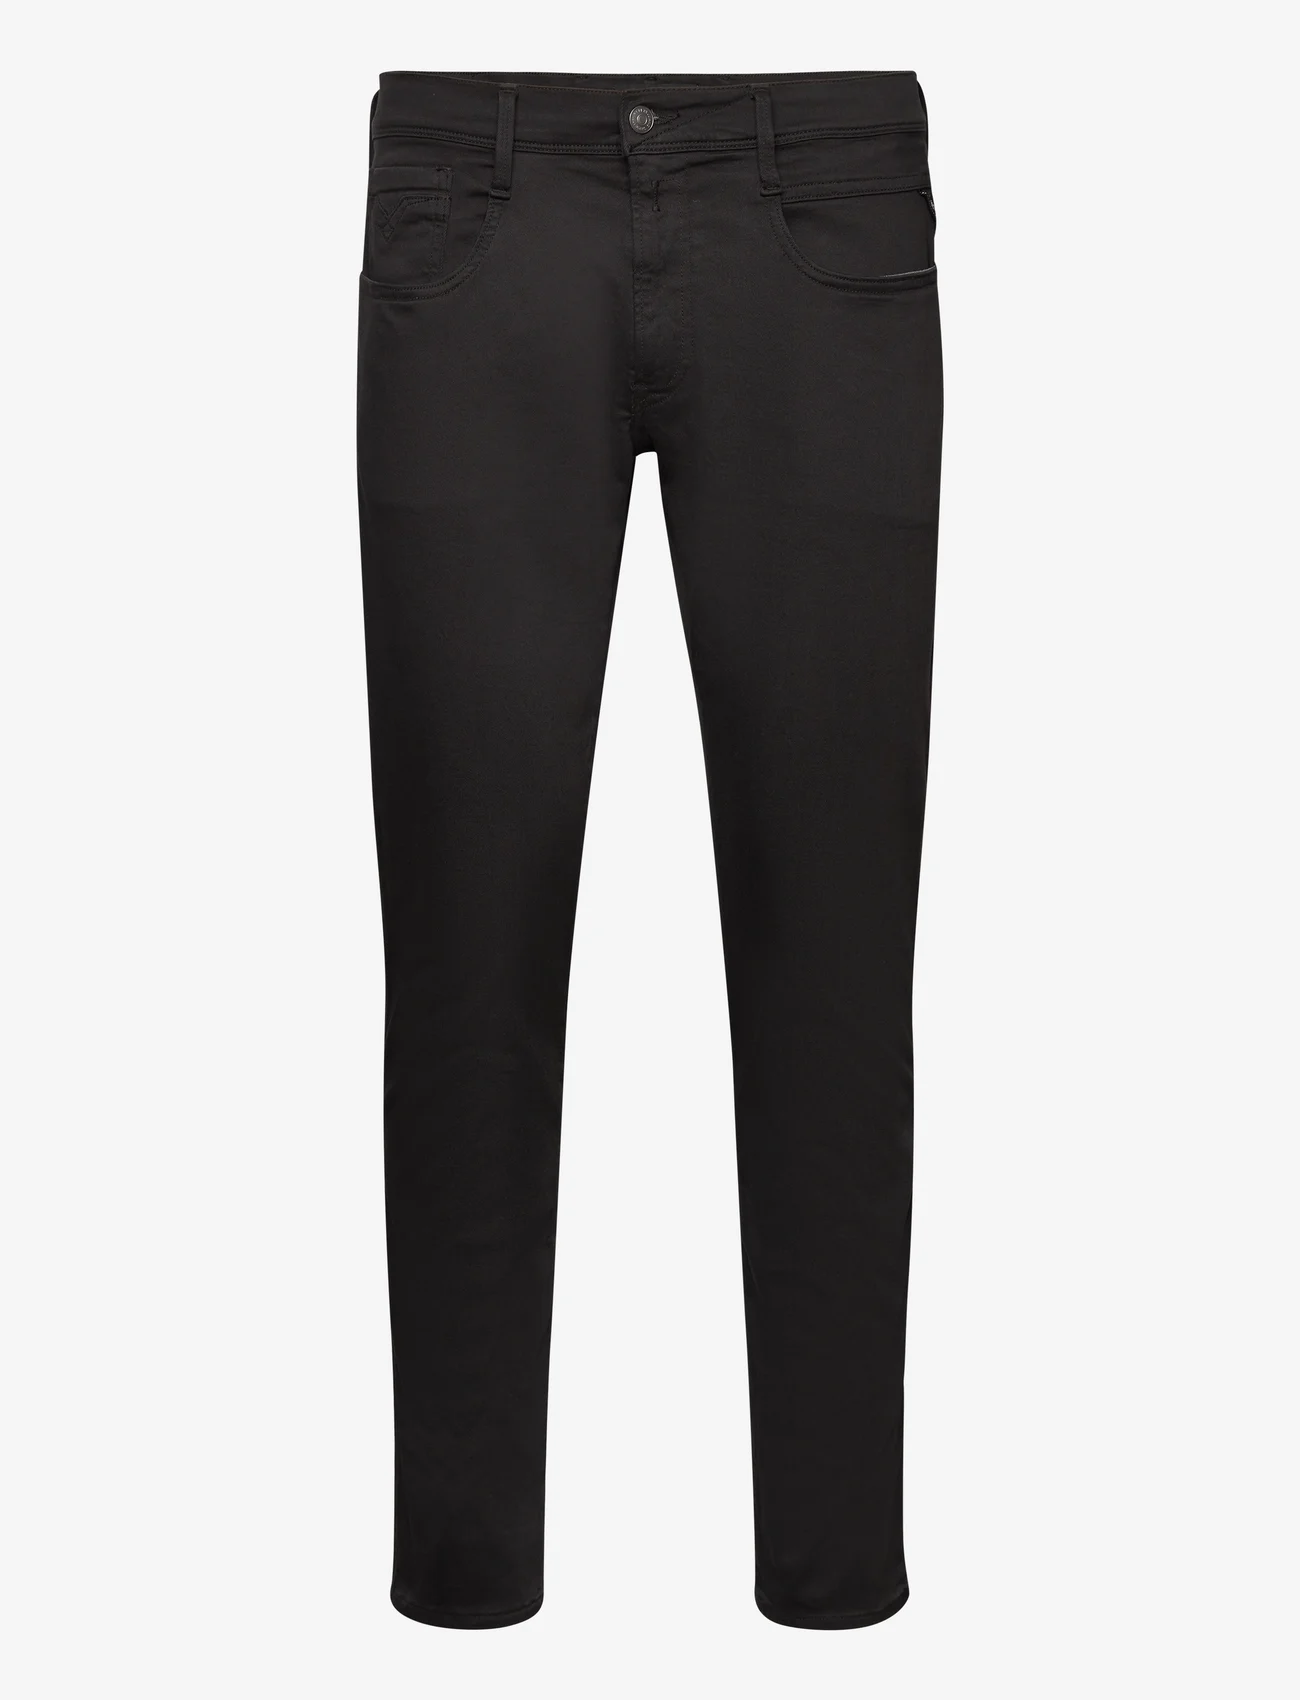 Replay - ANBASS Trousers Hyperflex Colour XLite - slim fit jeans - black - 0